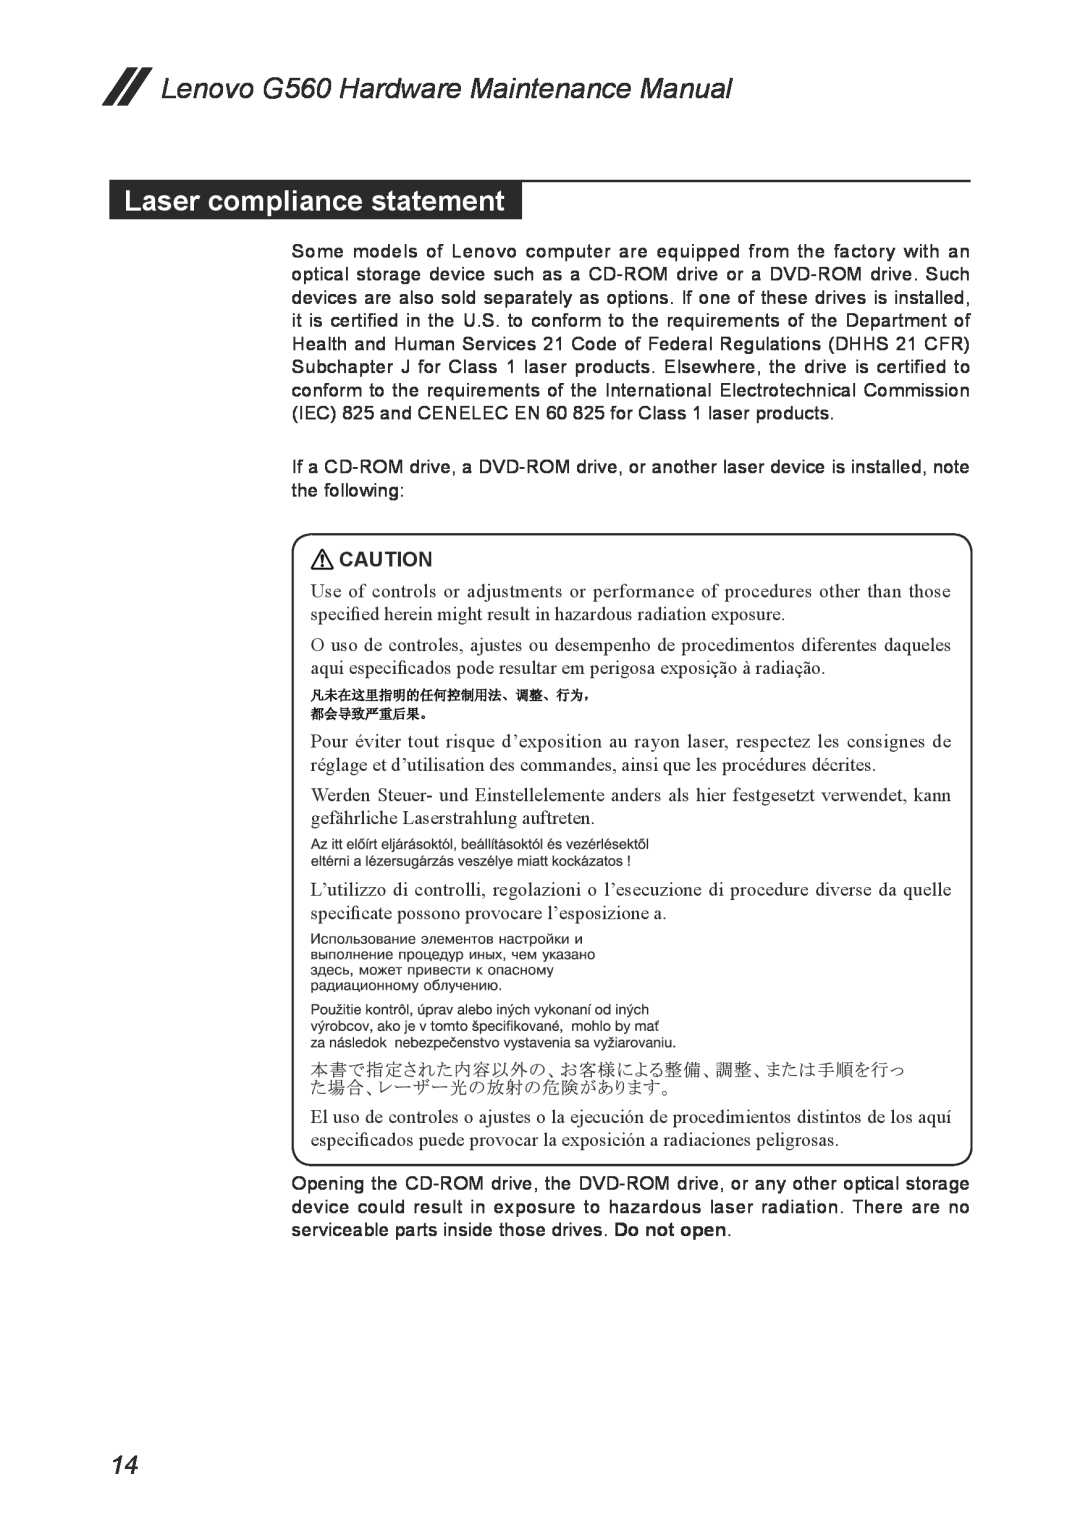 Lenovo manual Laser compliance statement, Lenovo G560 Hardware Maintenance Manual 